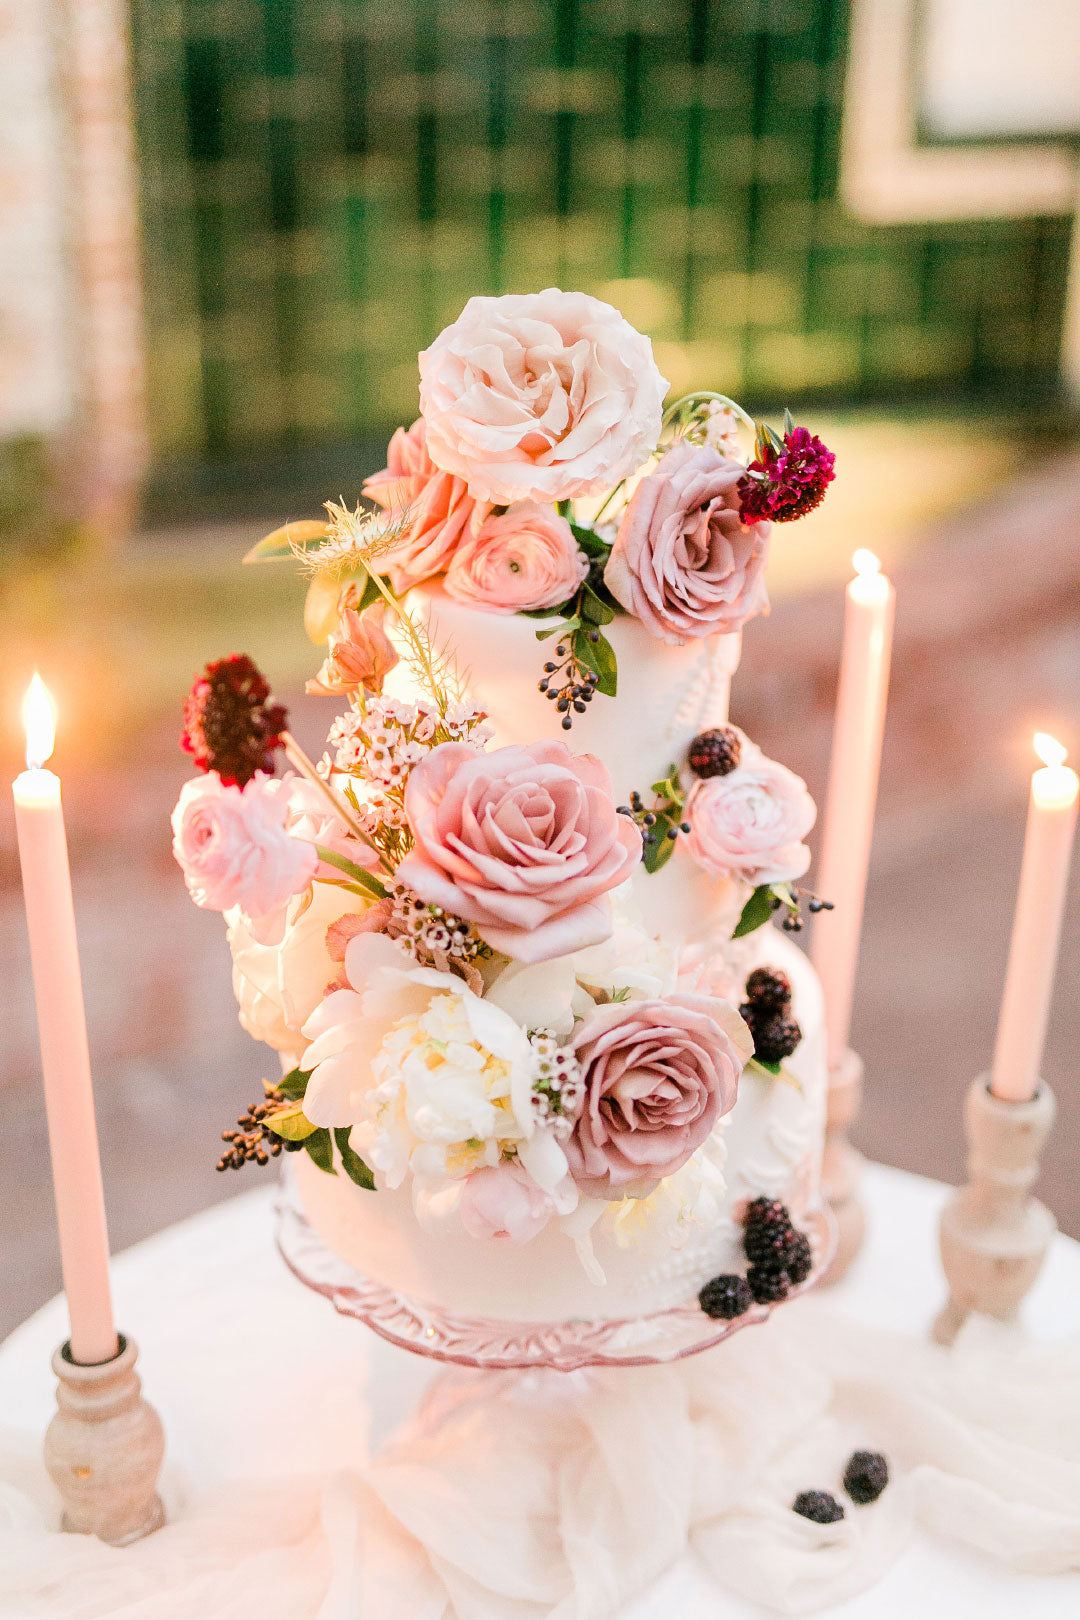 Wedding Cake with Rose decorations